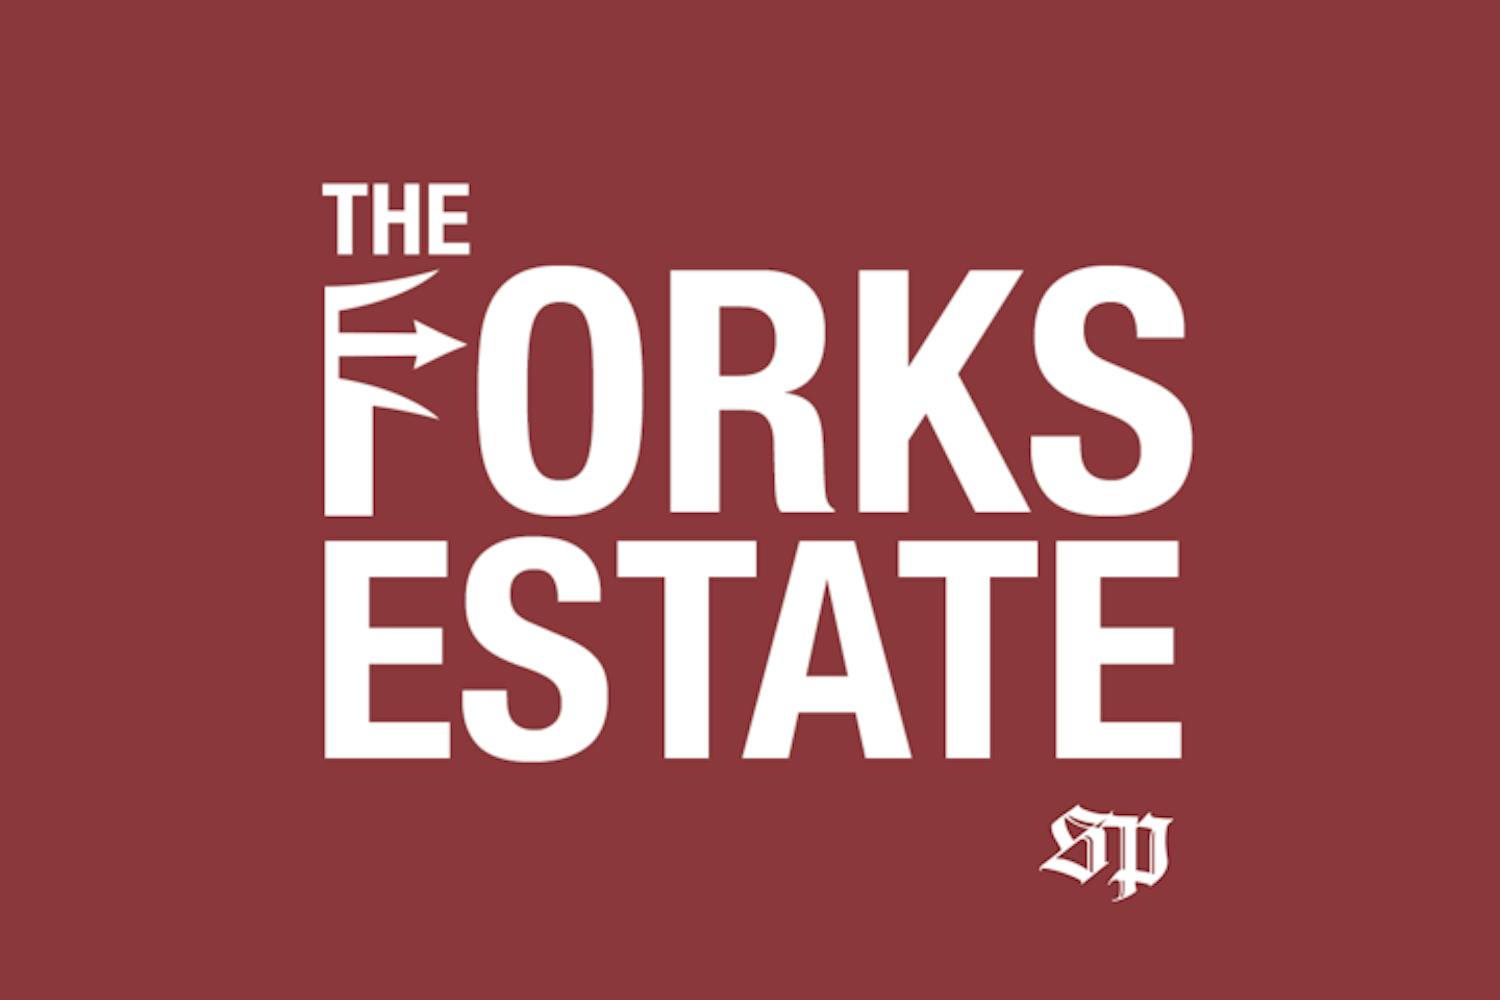 Graphic designed for The Forks Estate podcast.&nbsp;